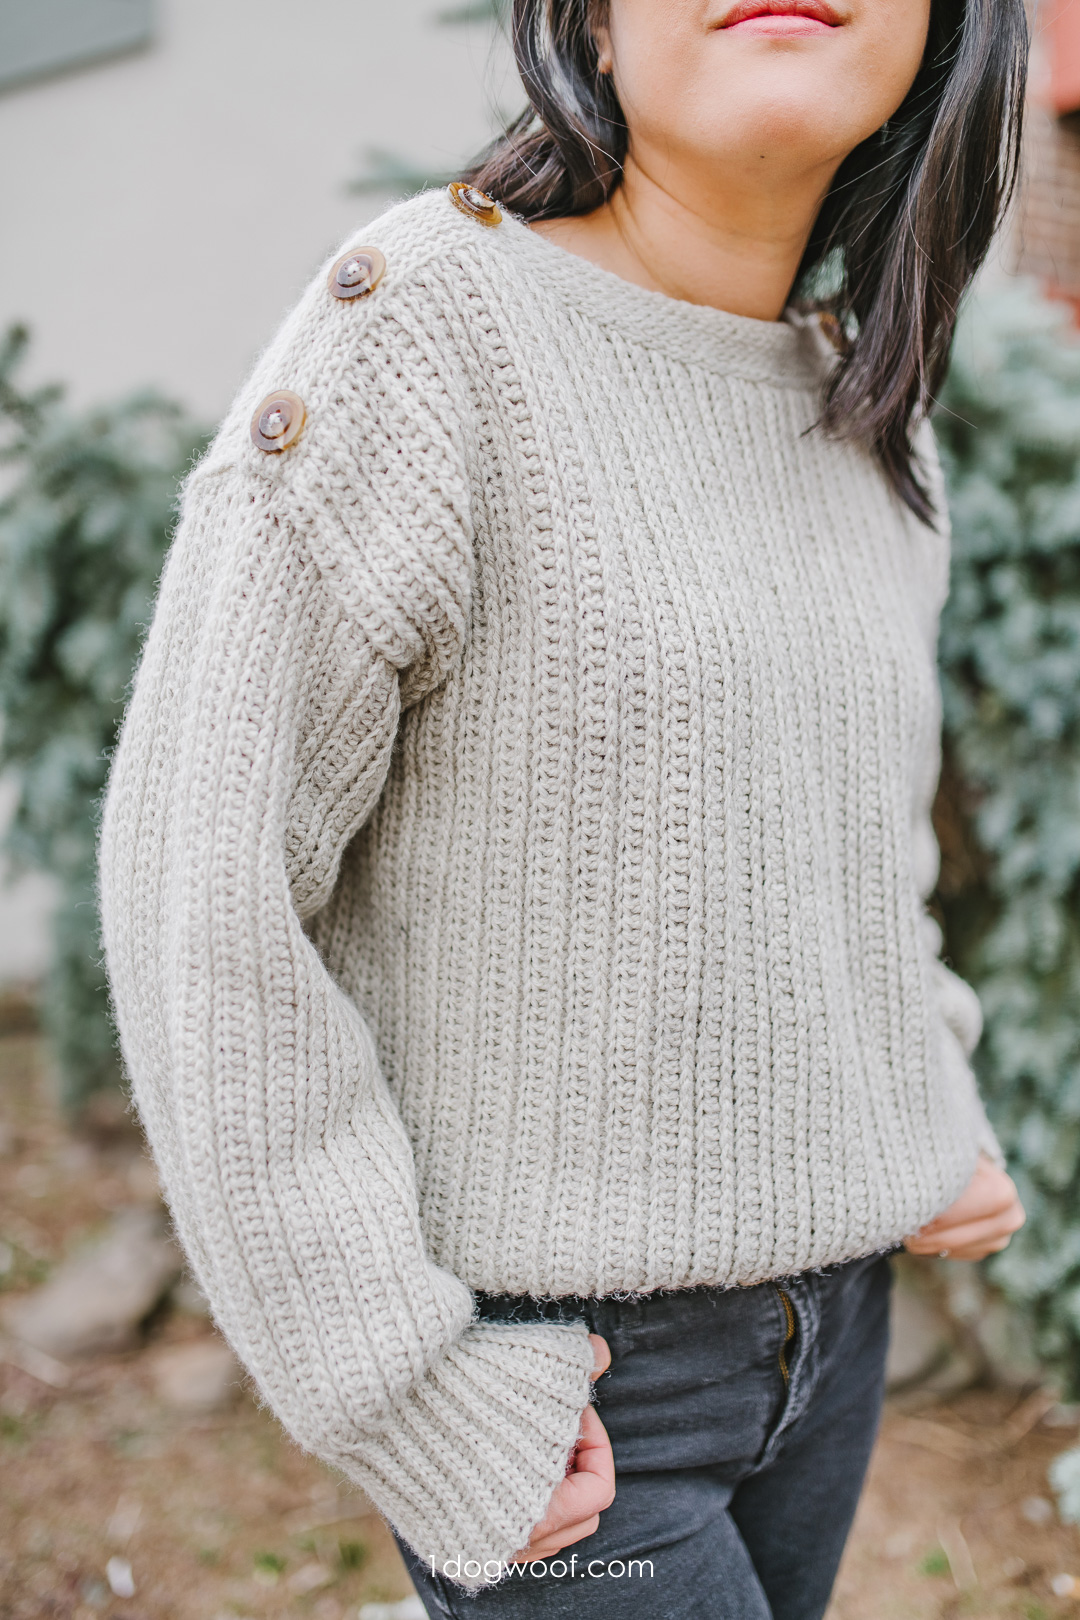 The High Line: A Button-Shoulder Crochet Sweater